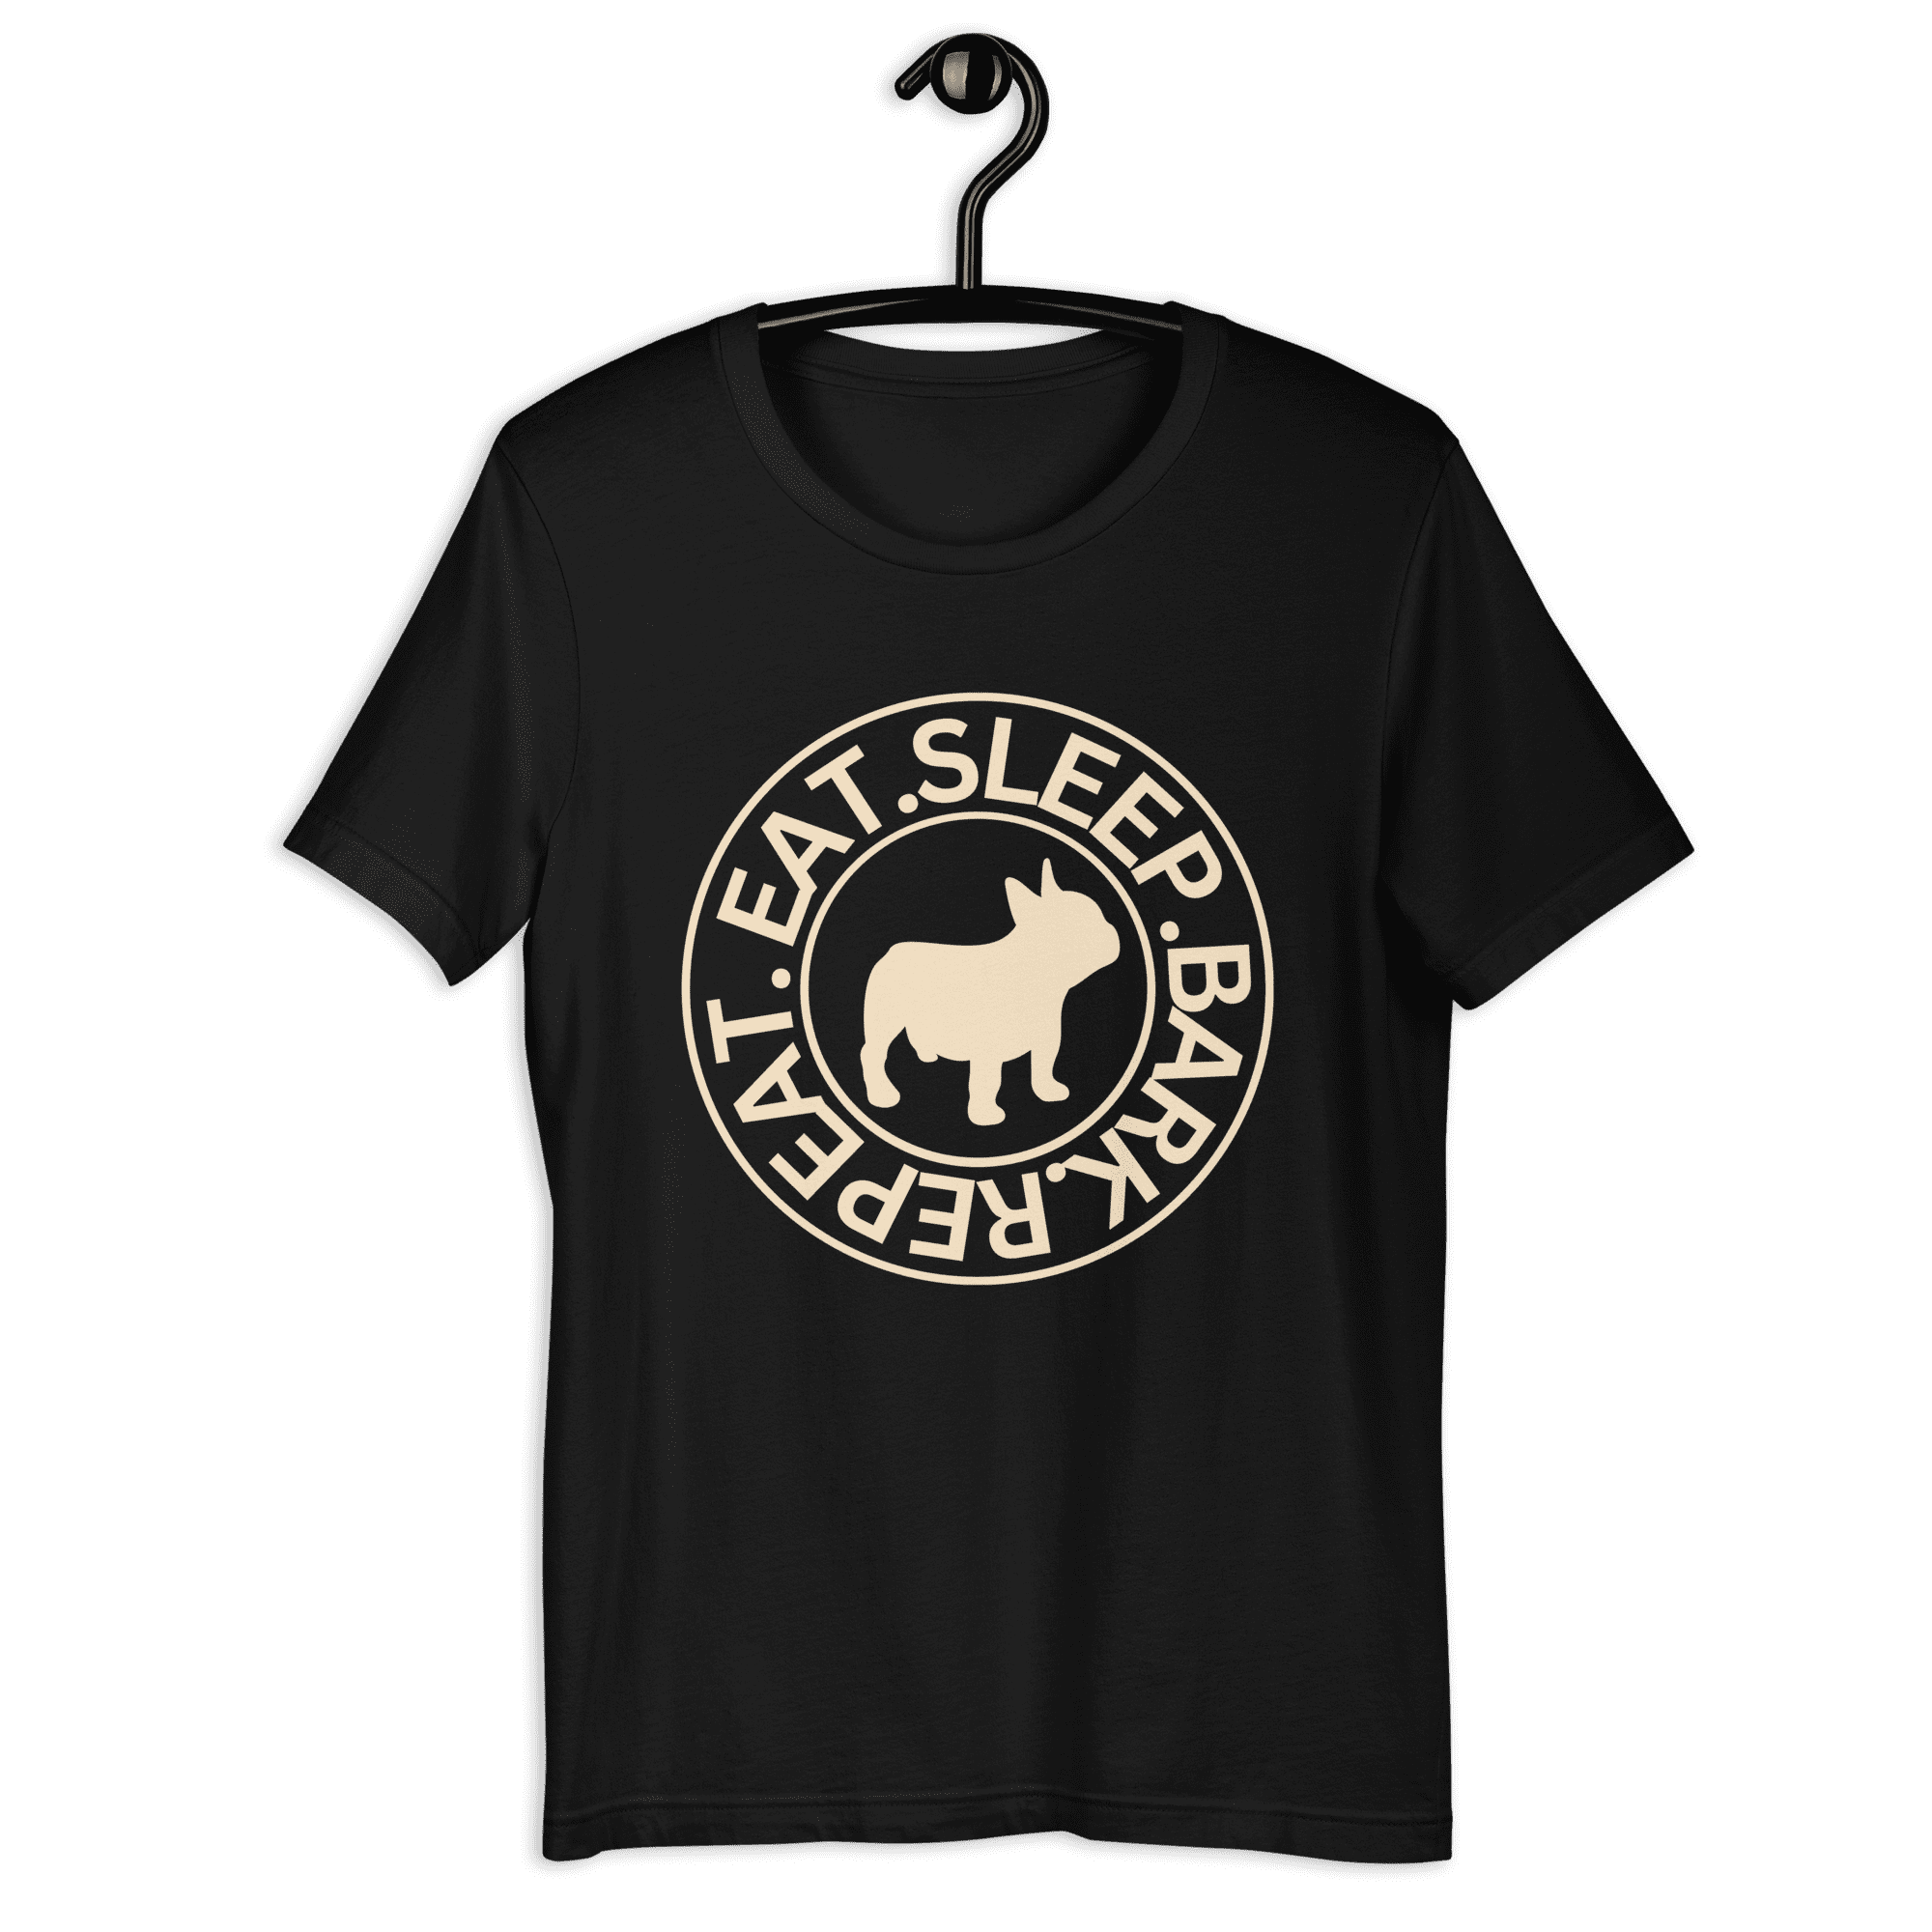 The "Eat Sleep Bark Repeat" French Bulldog Unisex T-Shirt. Black